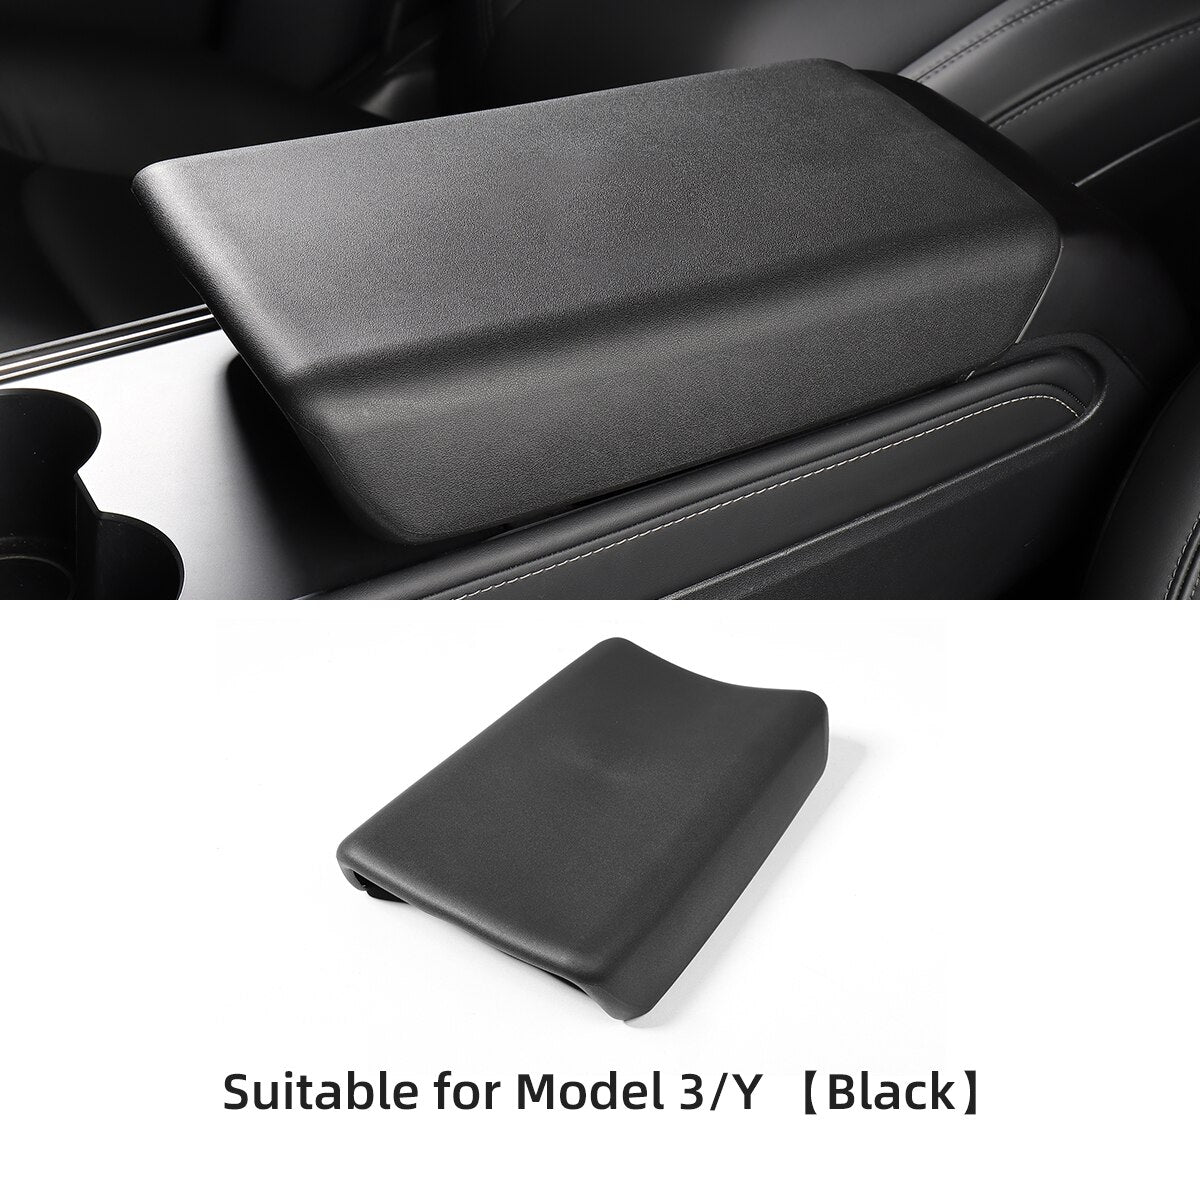 Car TPE Armrest Box Cover Central Control Armrest Protective Pad Interior Accessories For Tesla Model 3 Model Y 2021-2023